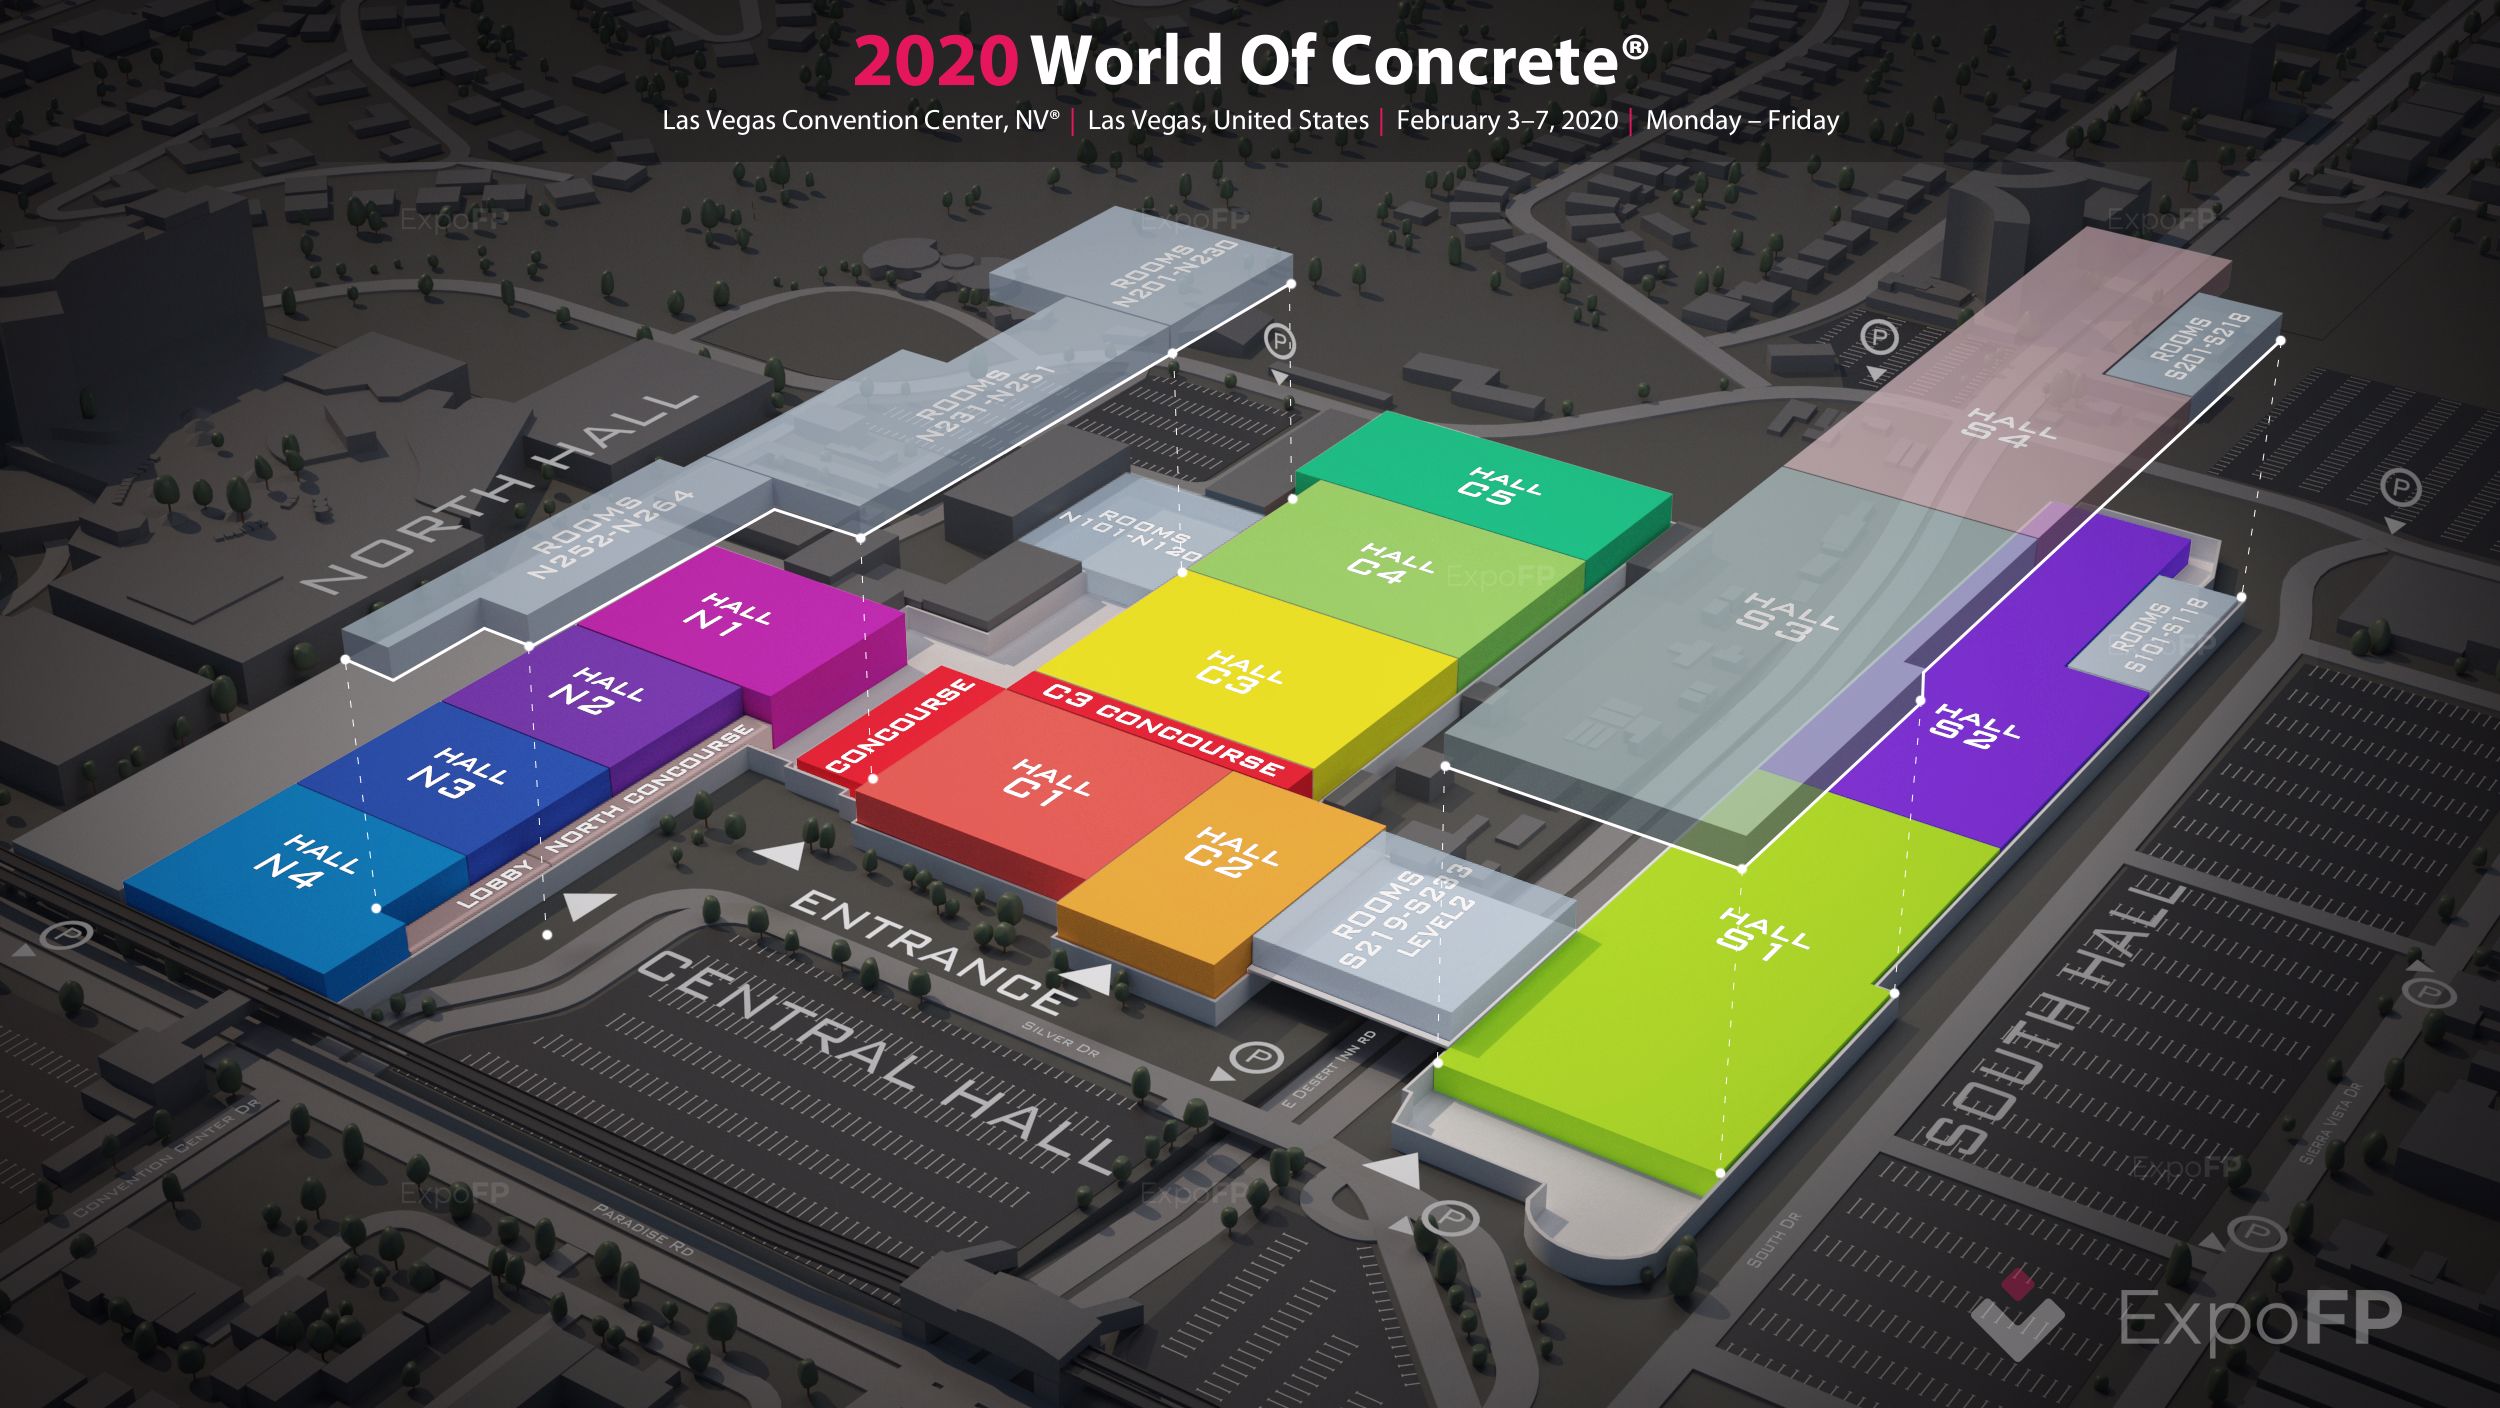 World of Concrete 2020 in Las Vegas Convention Center, NV